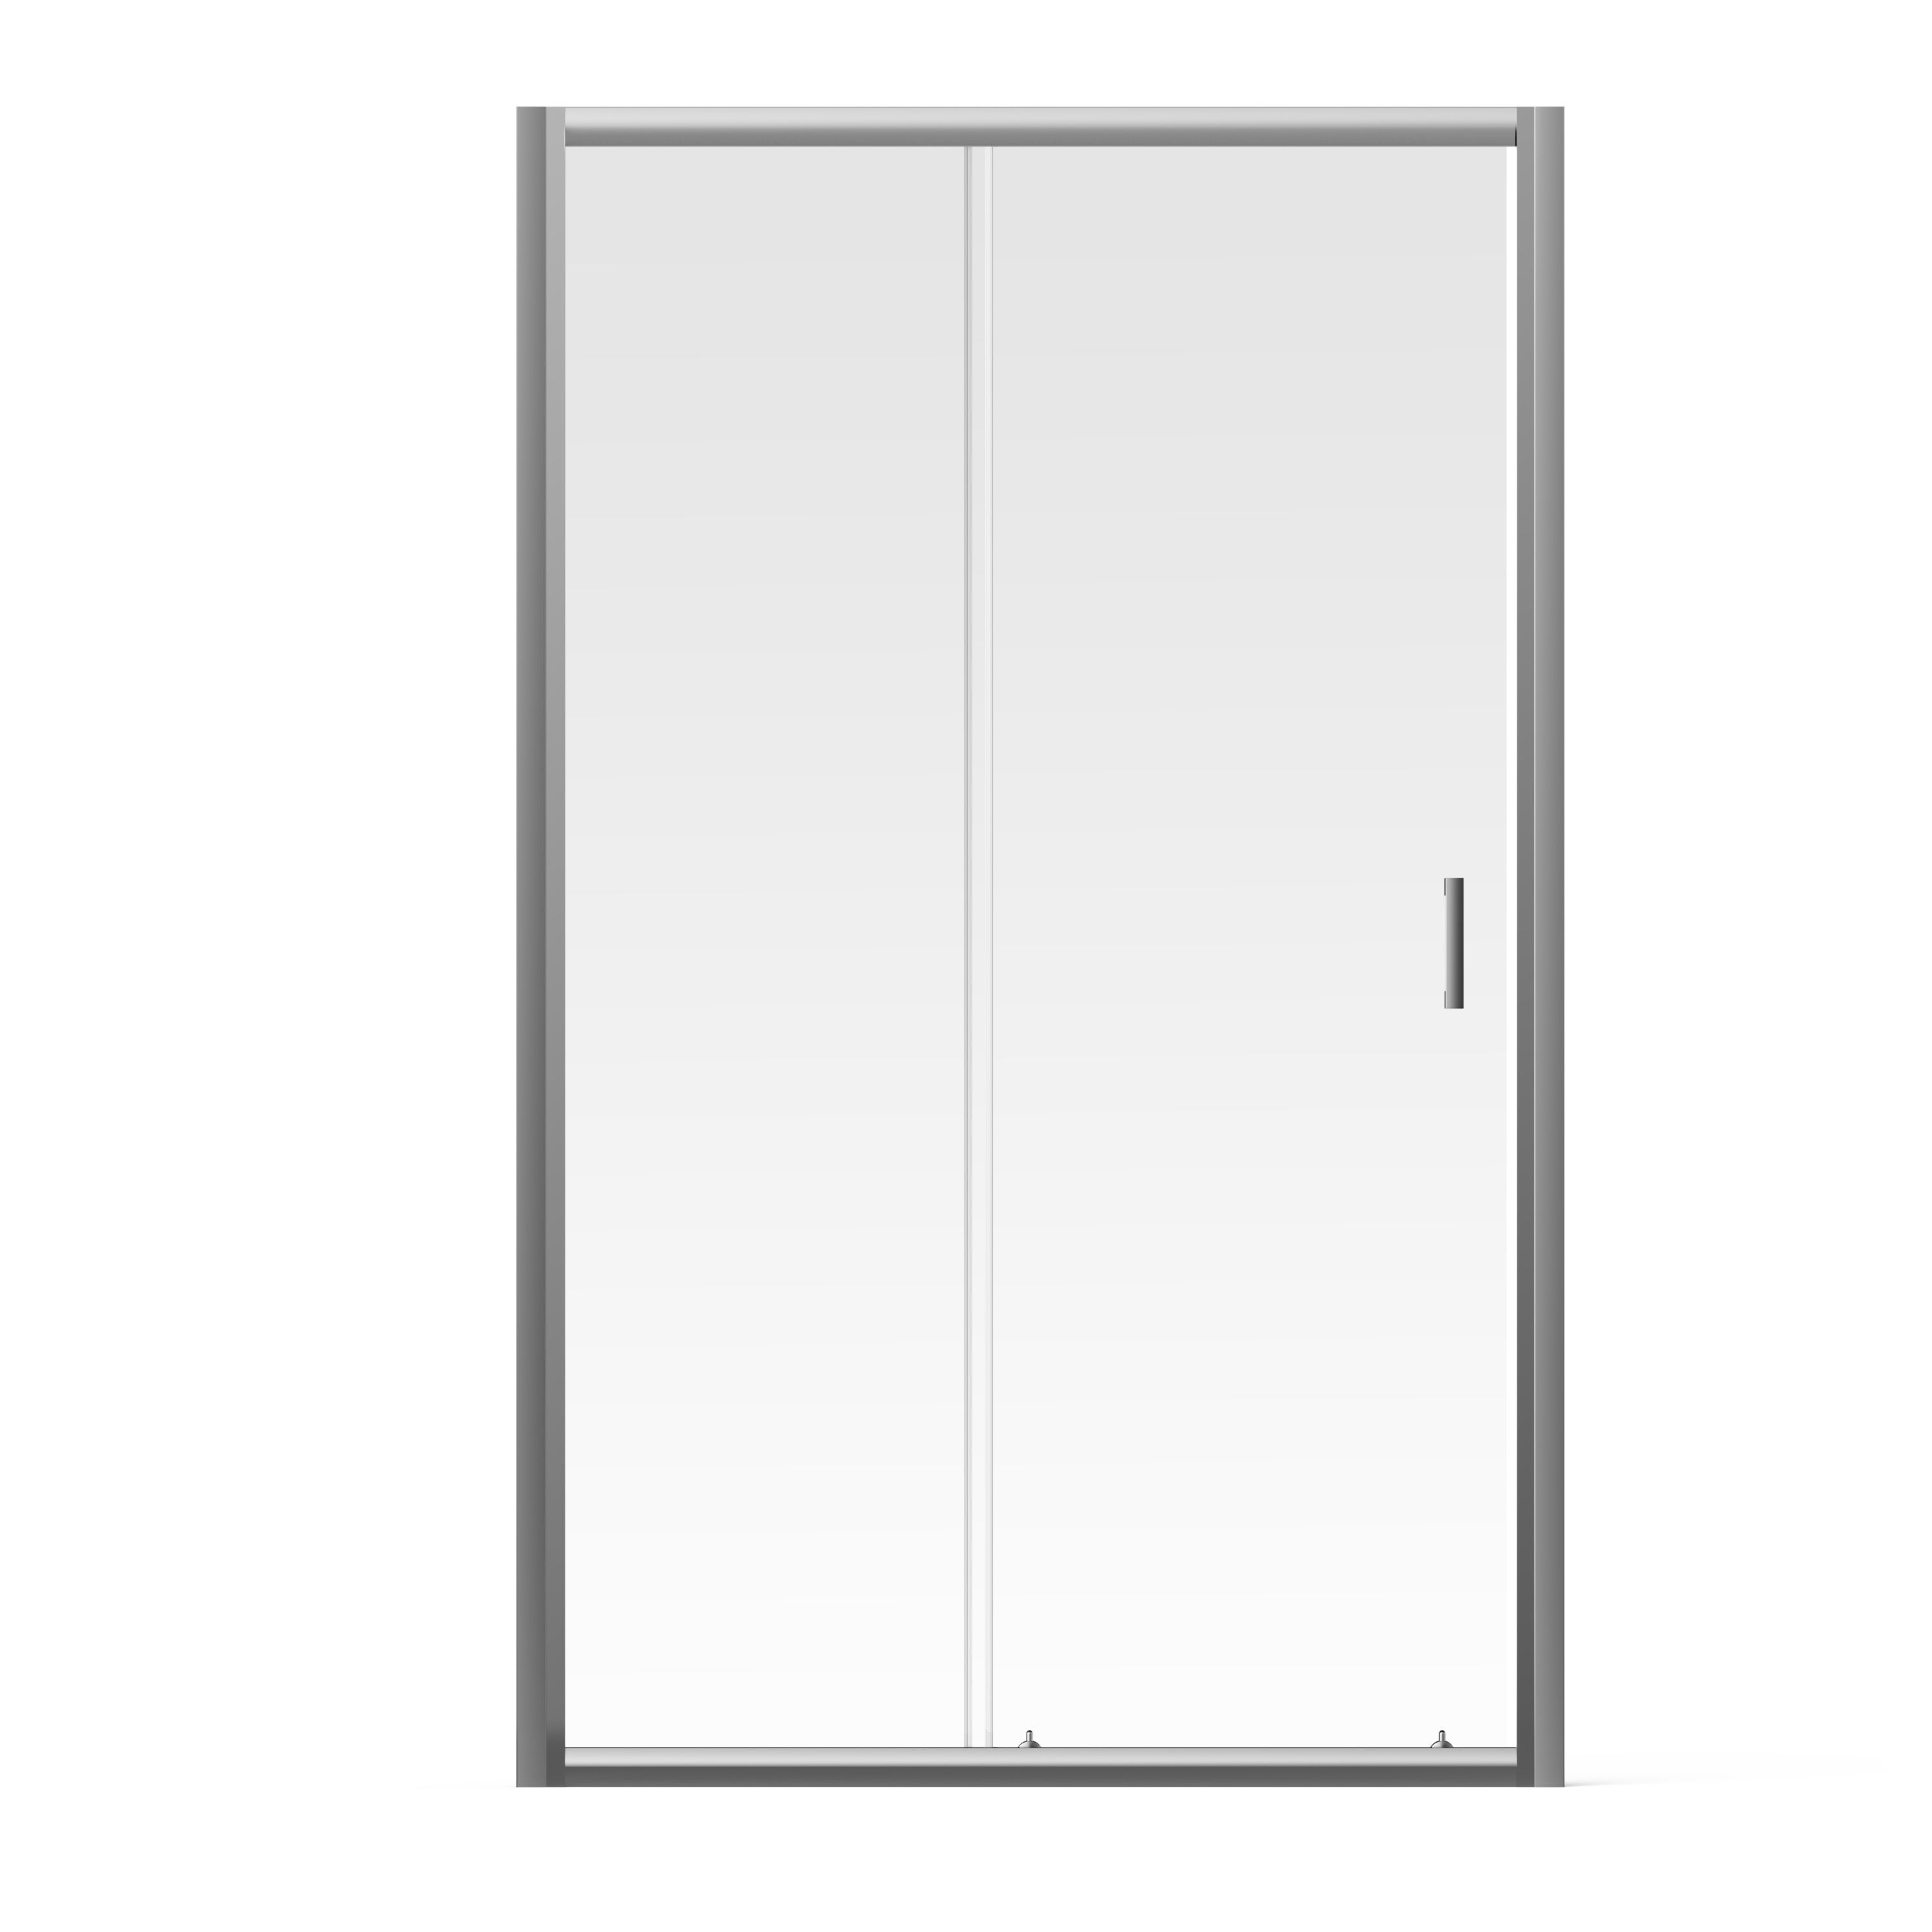 Aqualux Edge 6 Semi-framed Silver effect Clear glass Sliding Shower Door (H)193.5cm (W)120cm